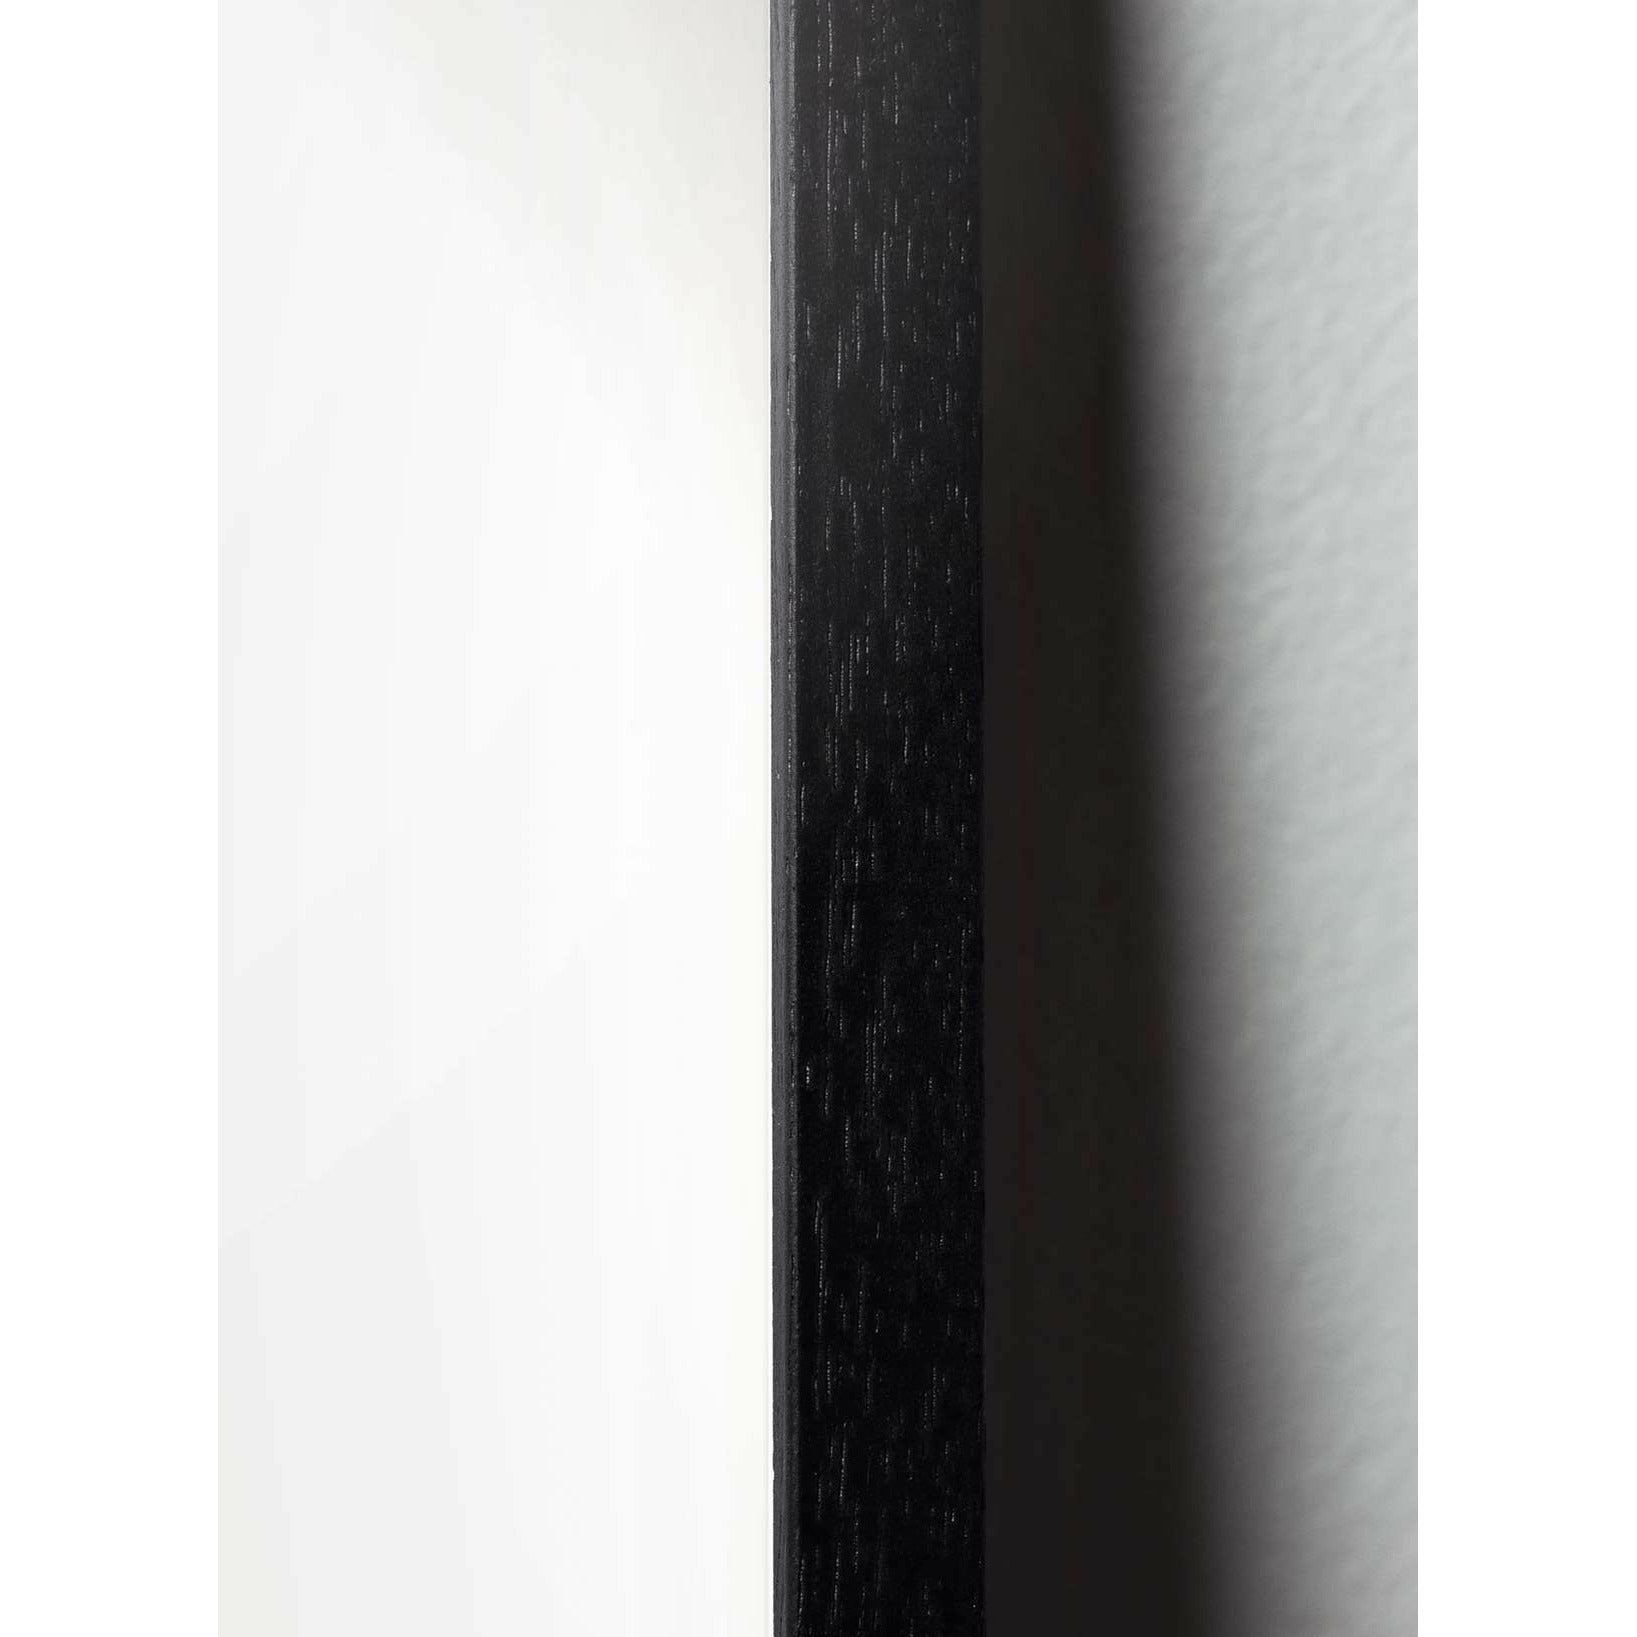 Brainchild Vintergapslinjeffisch, ram i svart -målat trä 30x40 cm, vit bakgrund